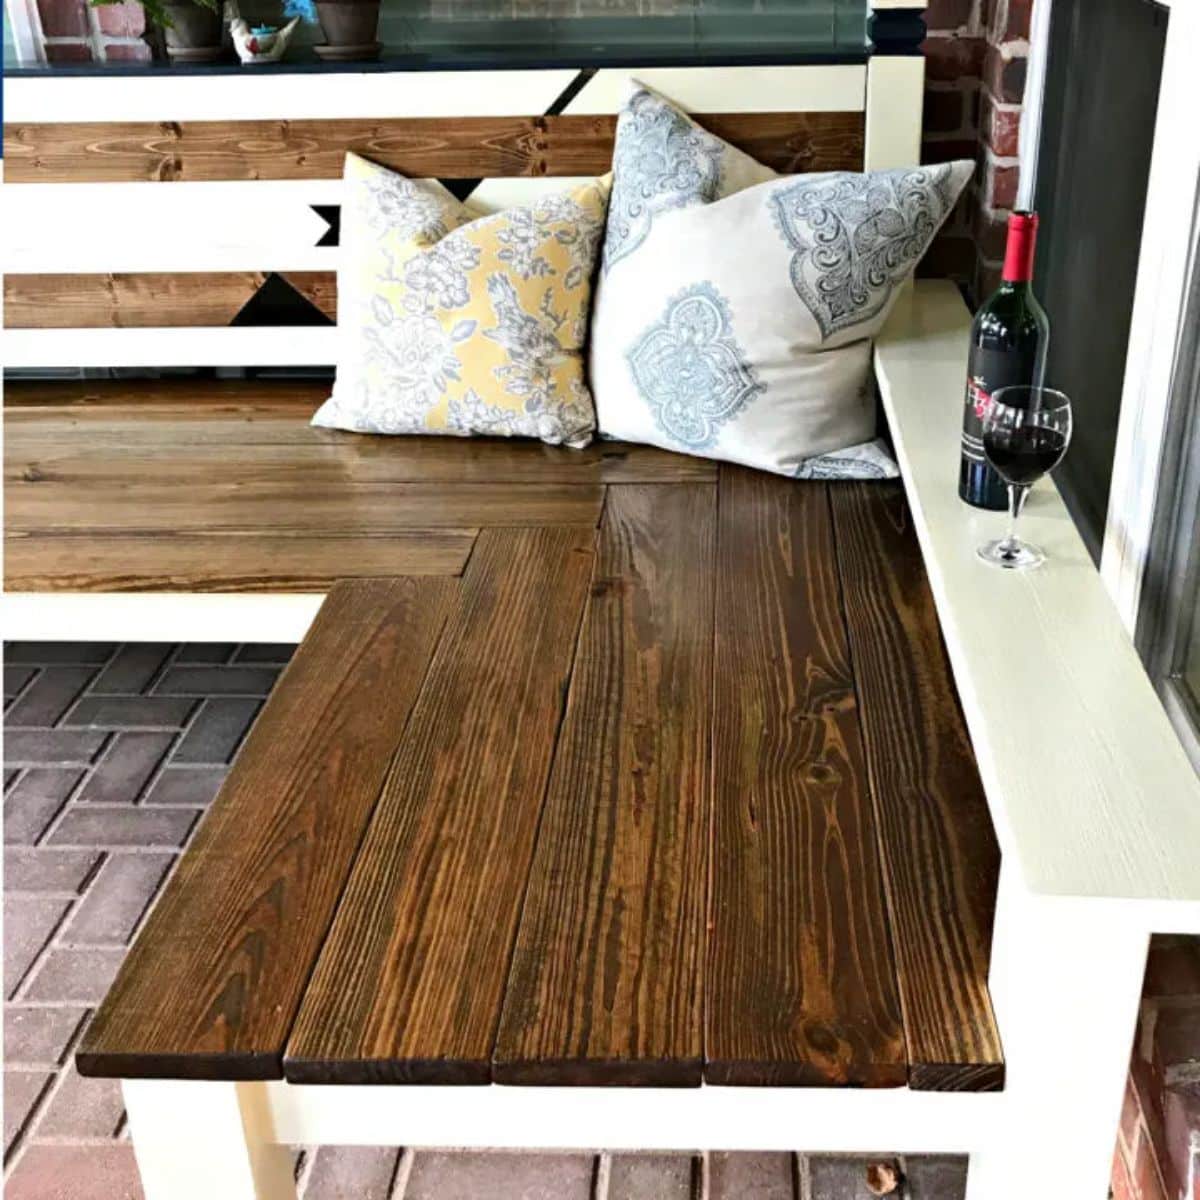 DIY Outdoor Kitchen Corner Bench Build